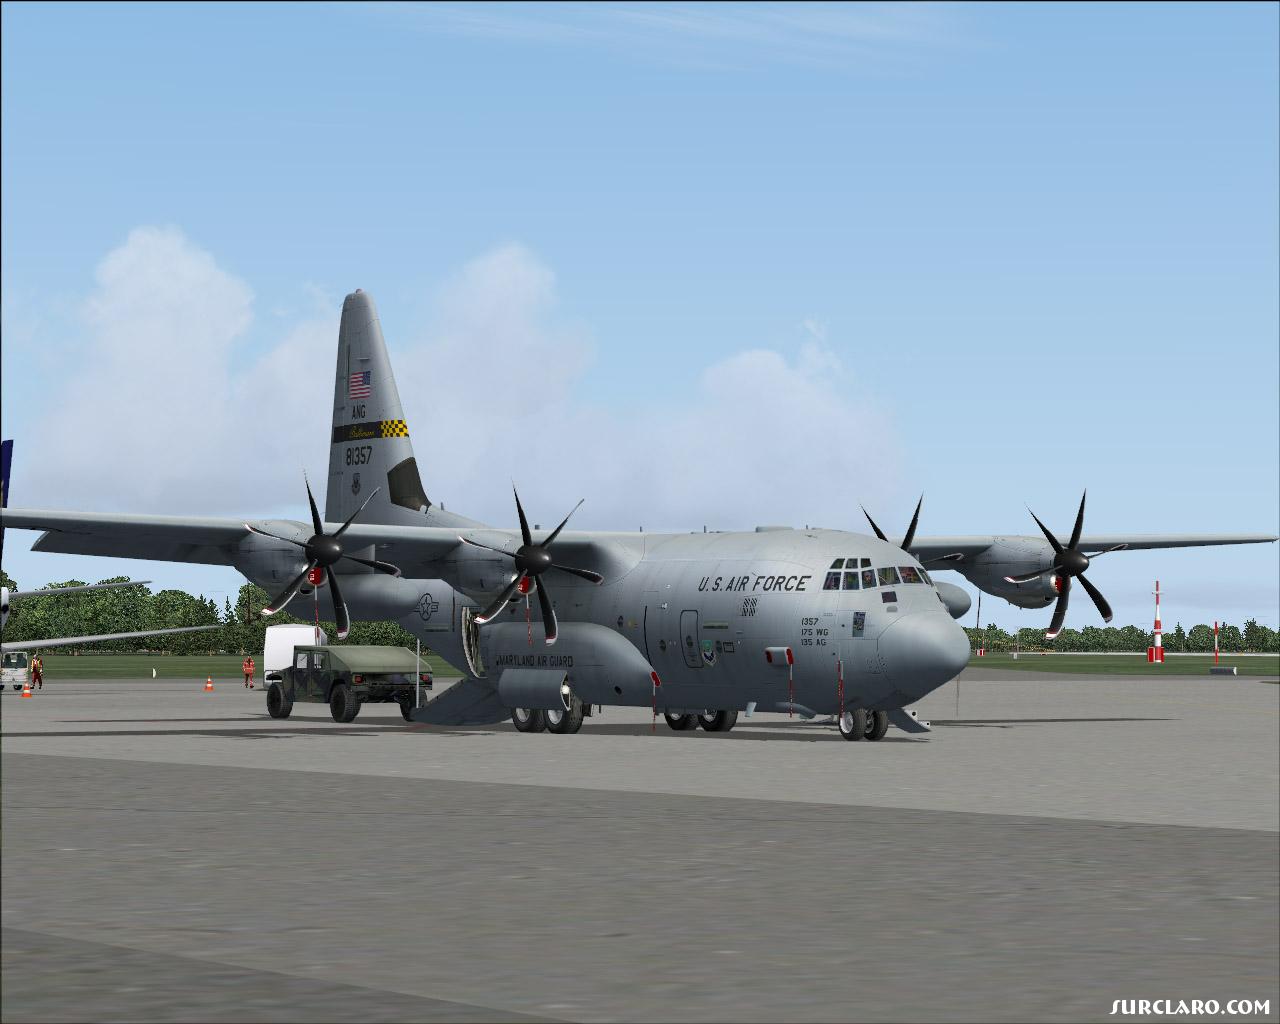 C-130J Hercules on ramp in Germany. - Photo 15302